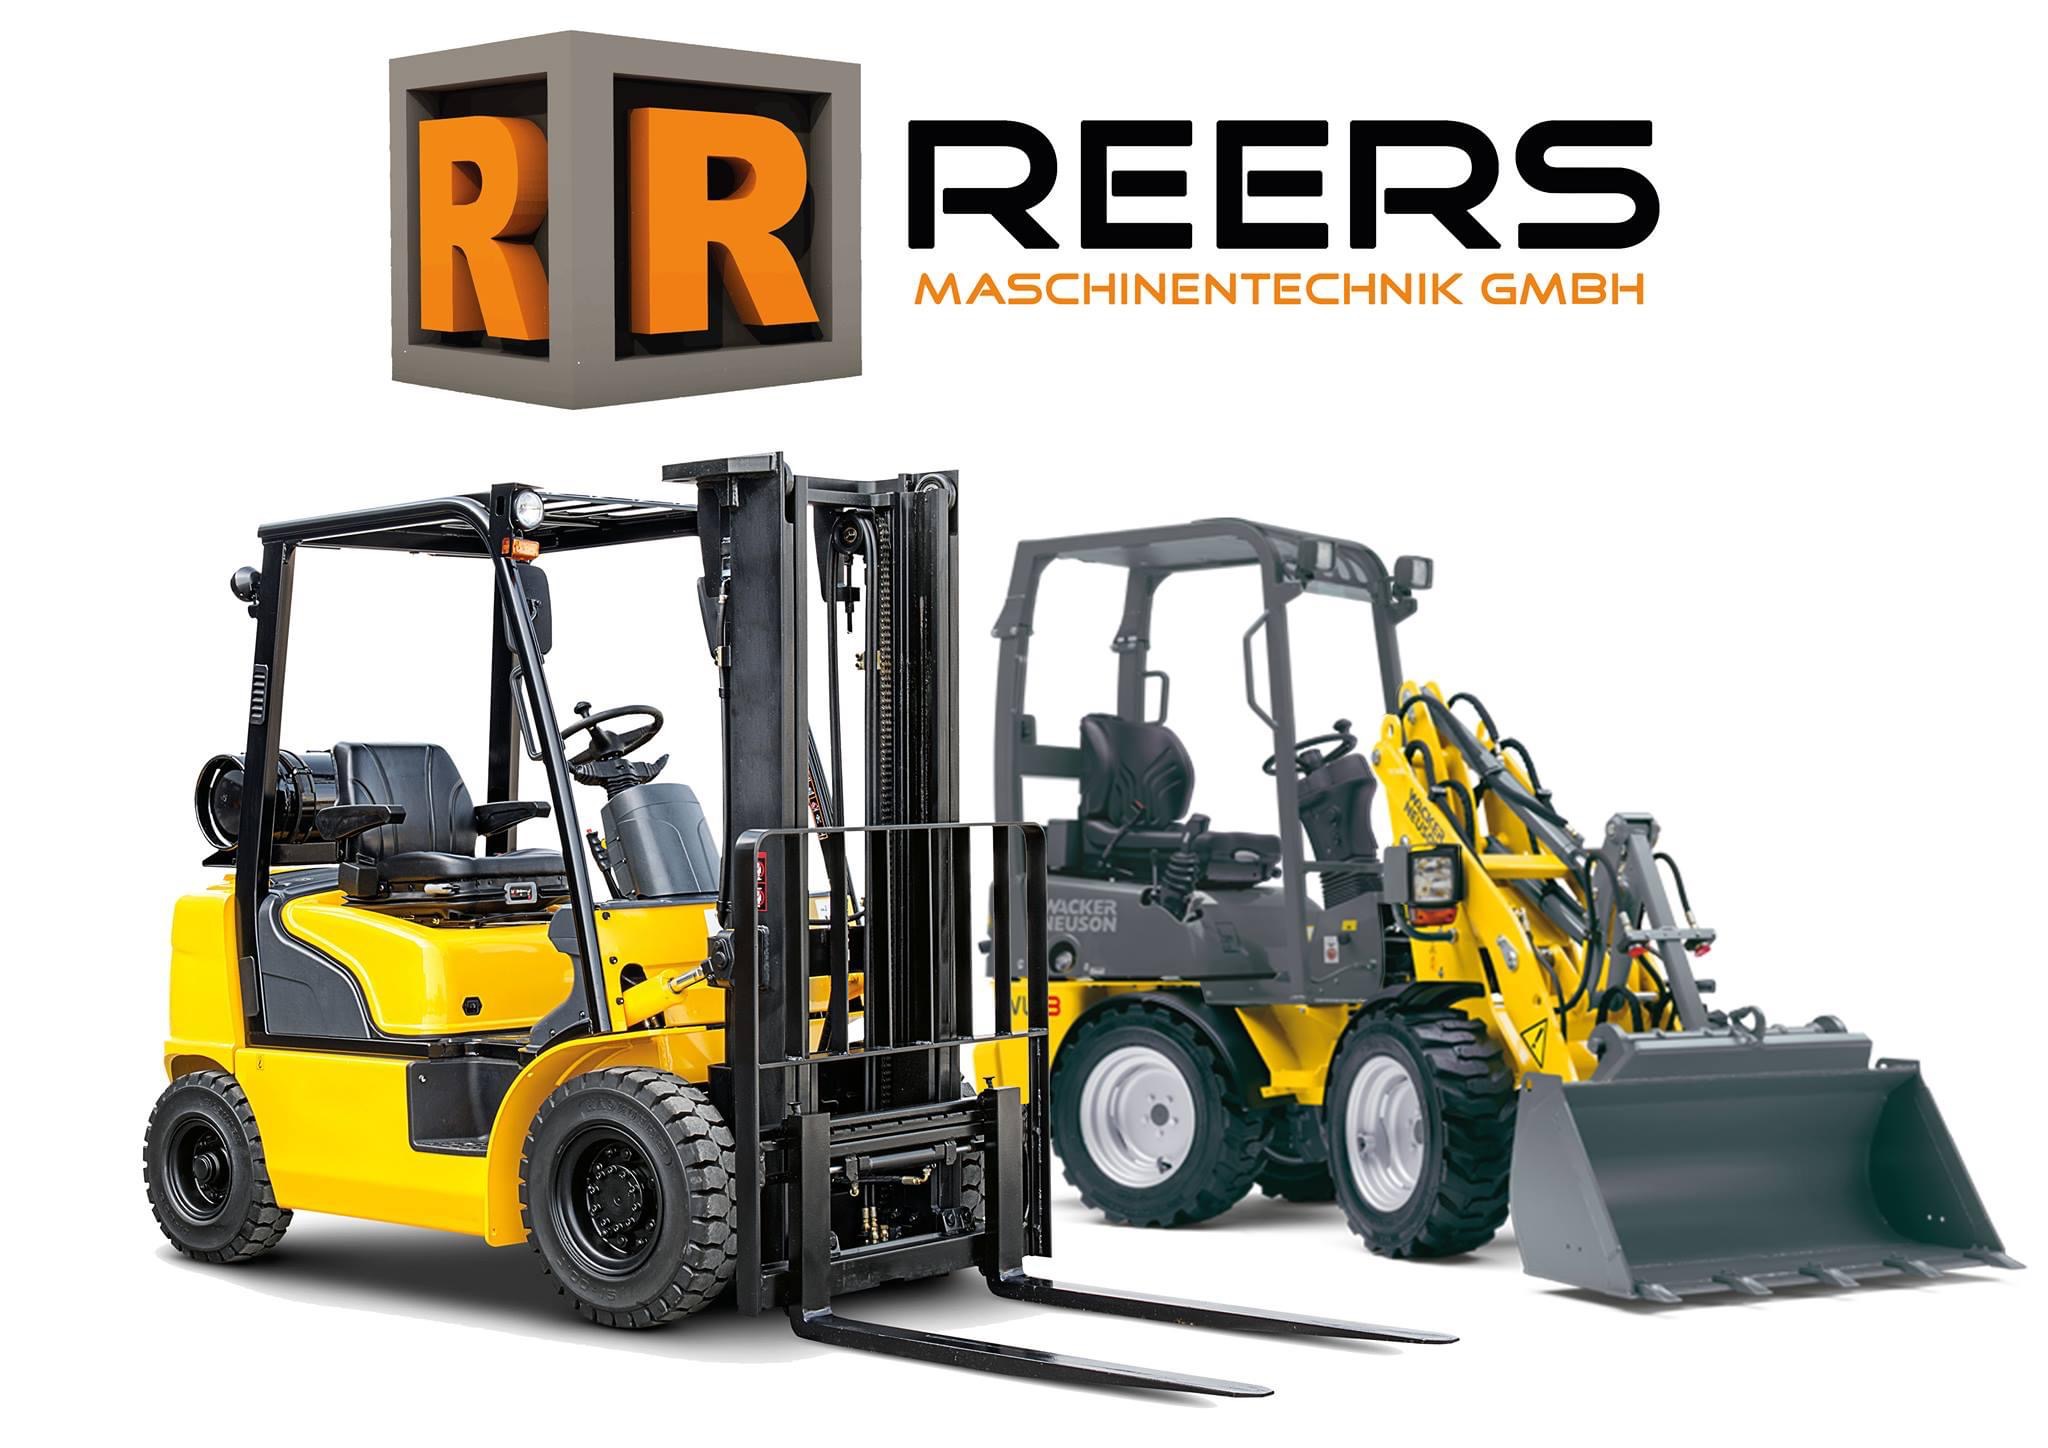 Reers Maschinentechnik GmbH